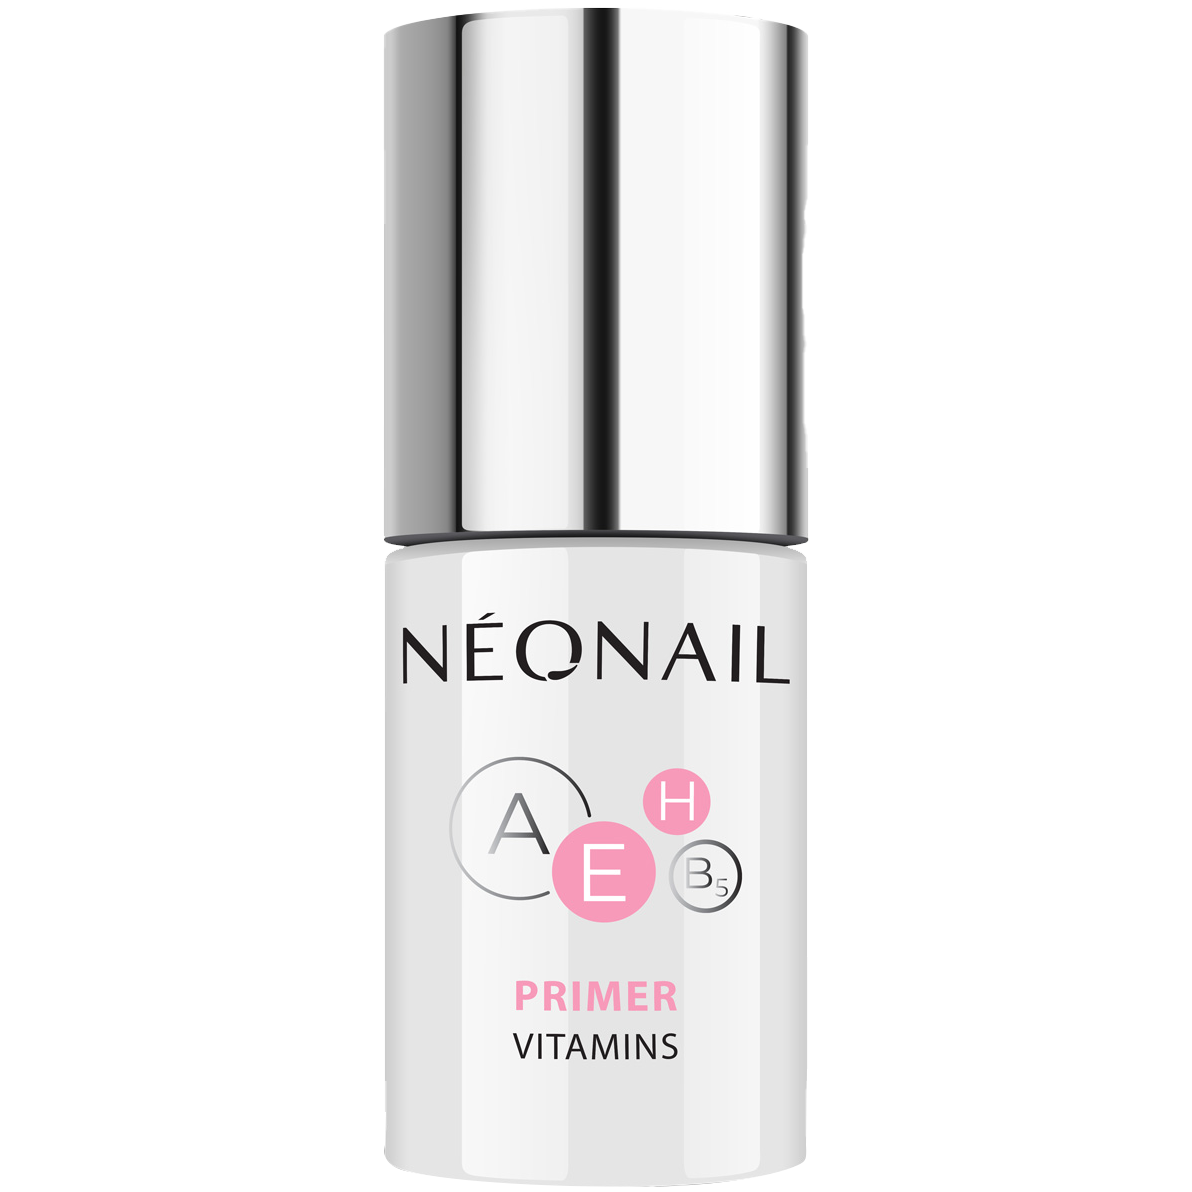 Neonail Primer Vitamins витаминный праймер для ногтей, 7,2 мл neonail праймер vitamins neonail 7 2мл 6499